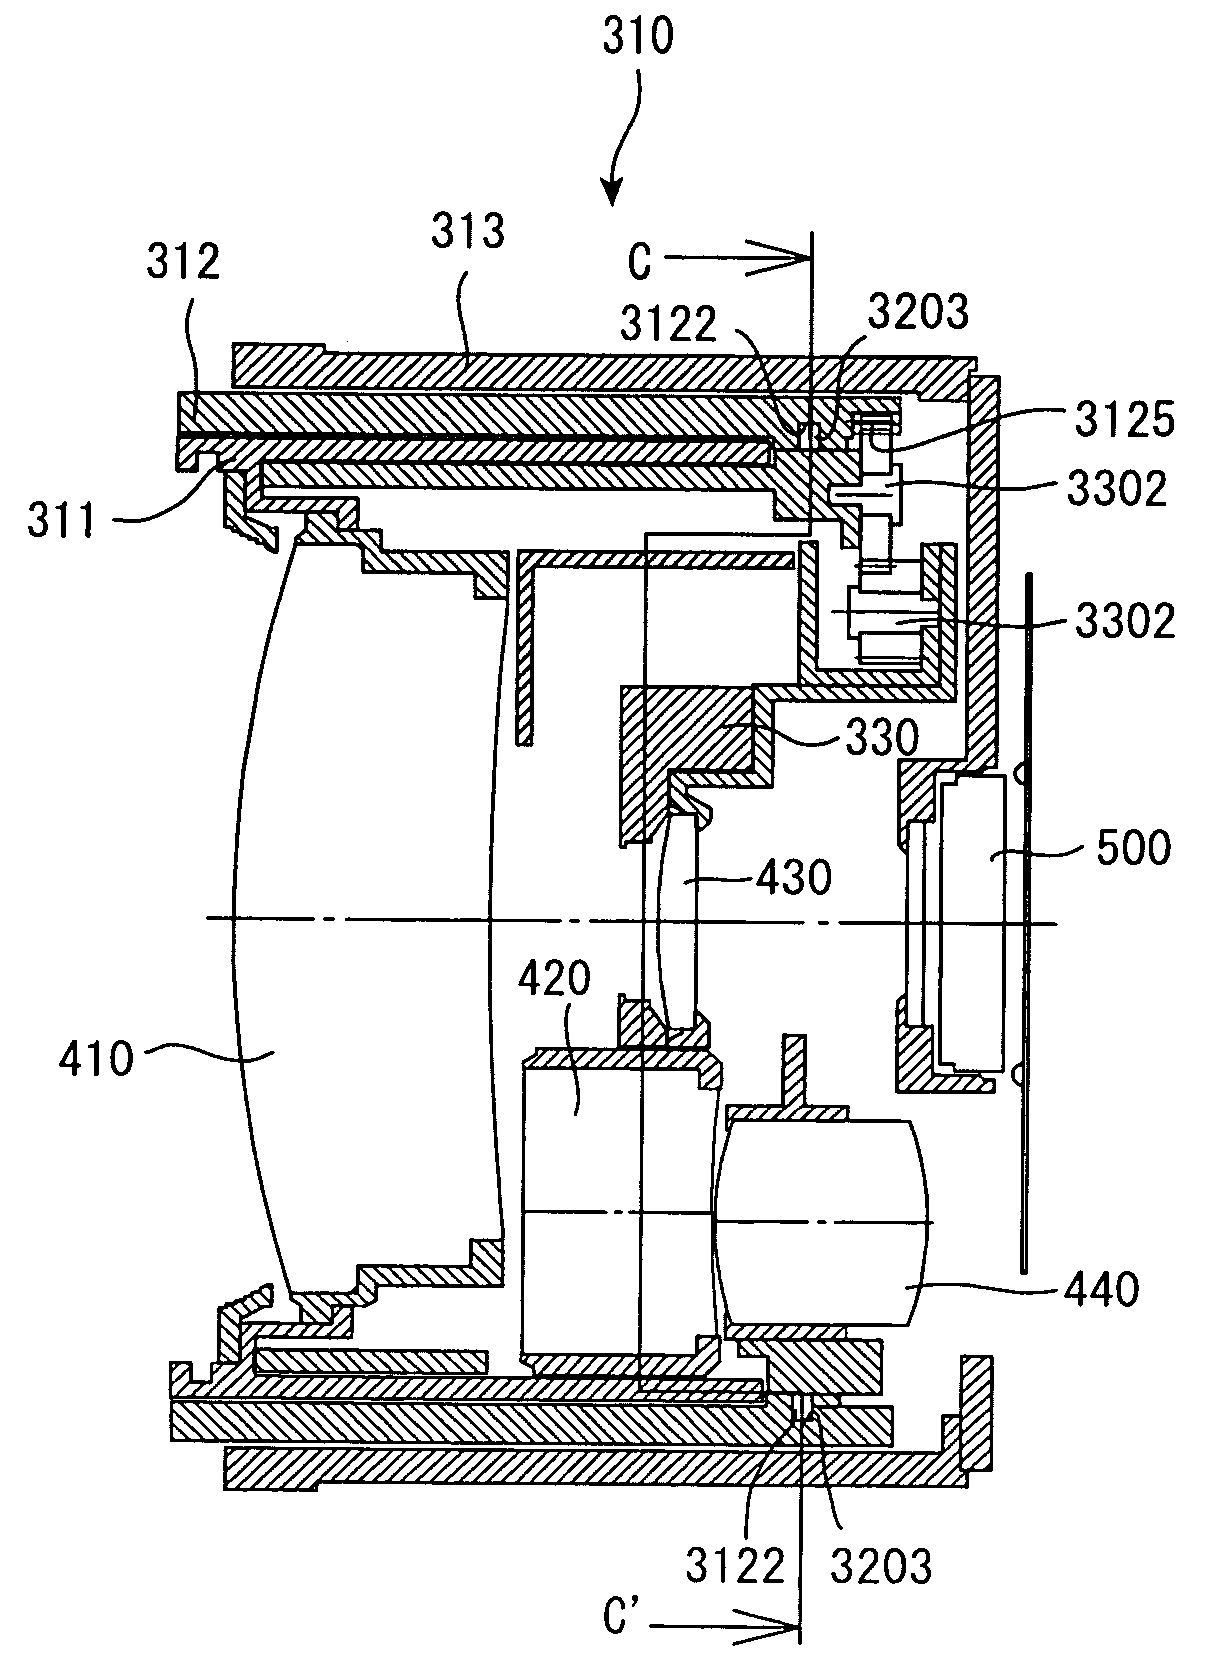 Lens barrel, photographic apparatus, and optical apparatus